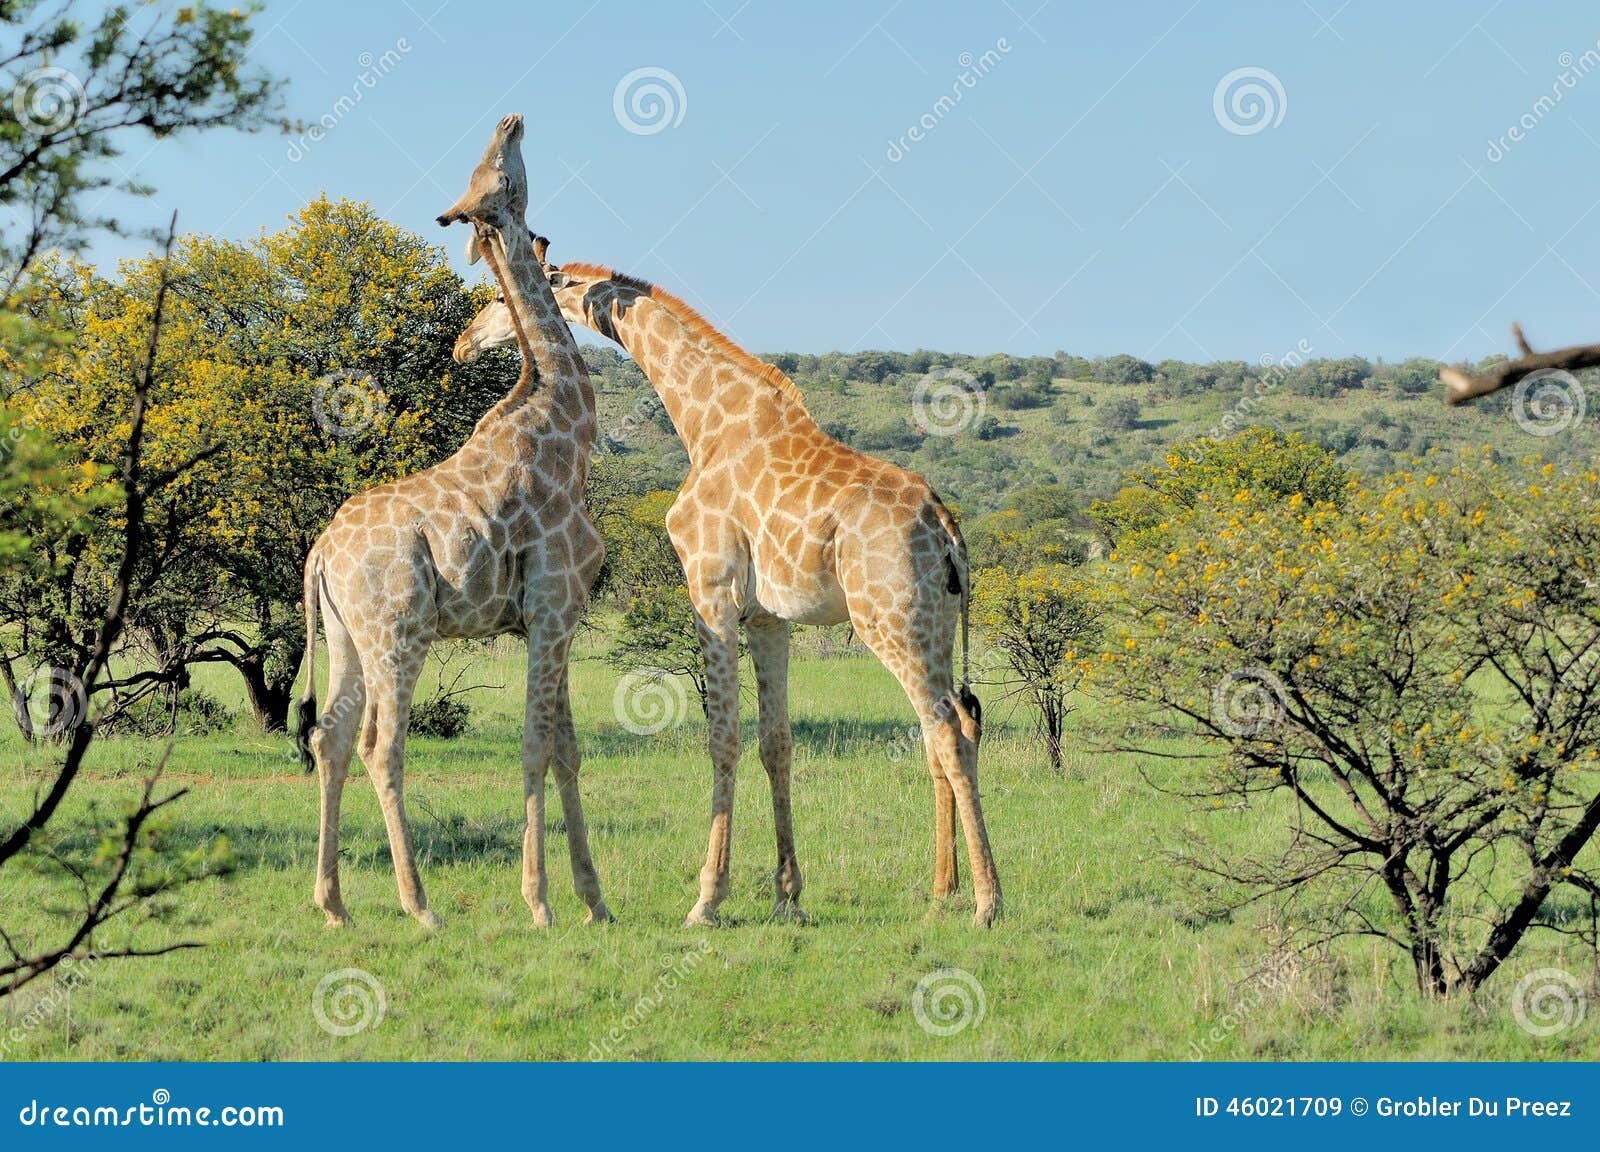 two necking giraffes